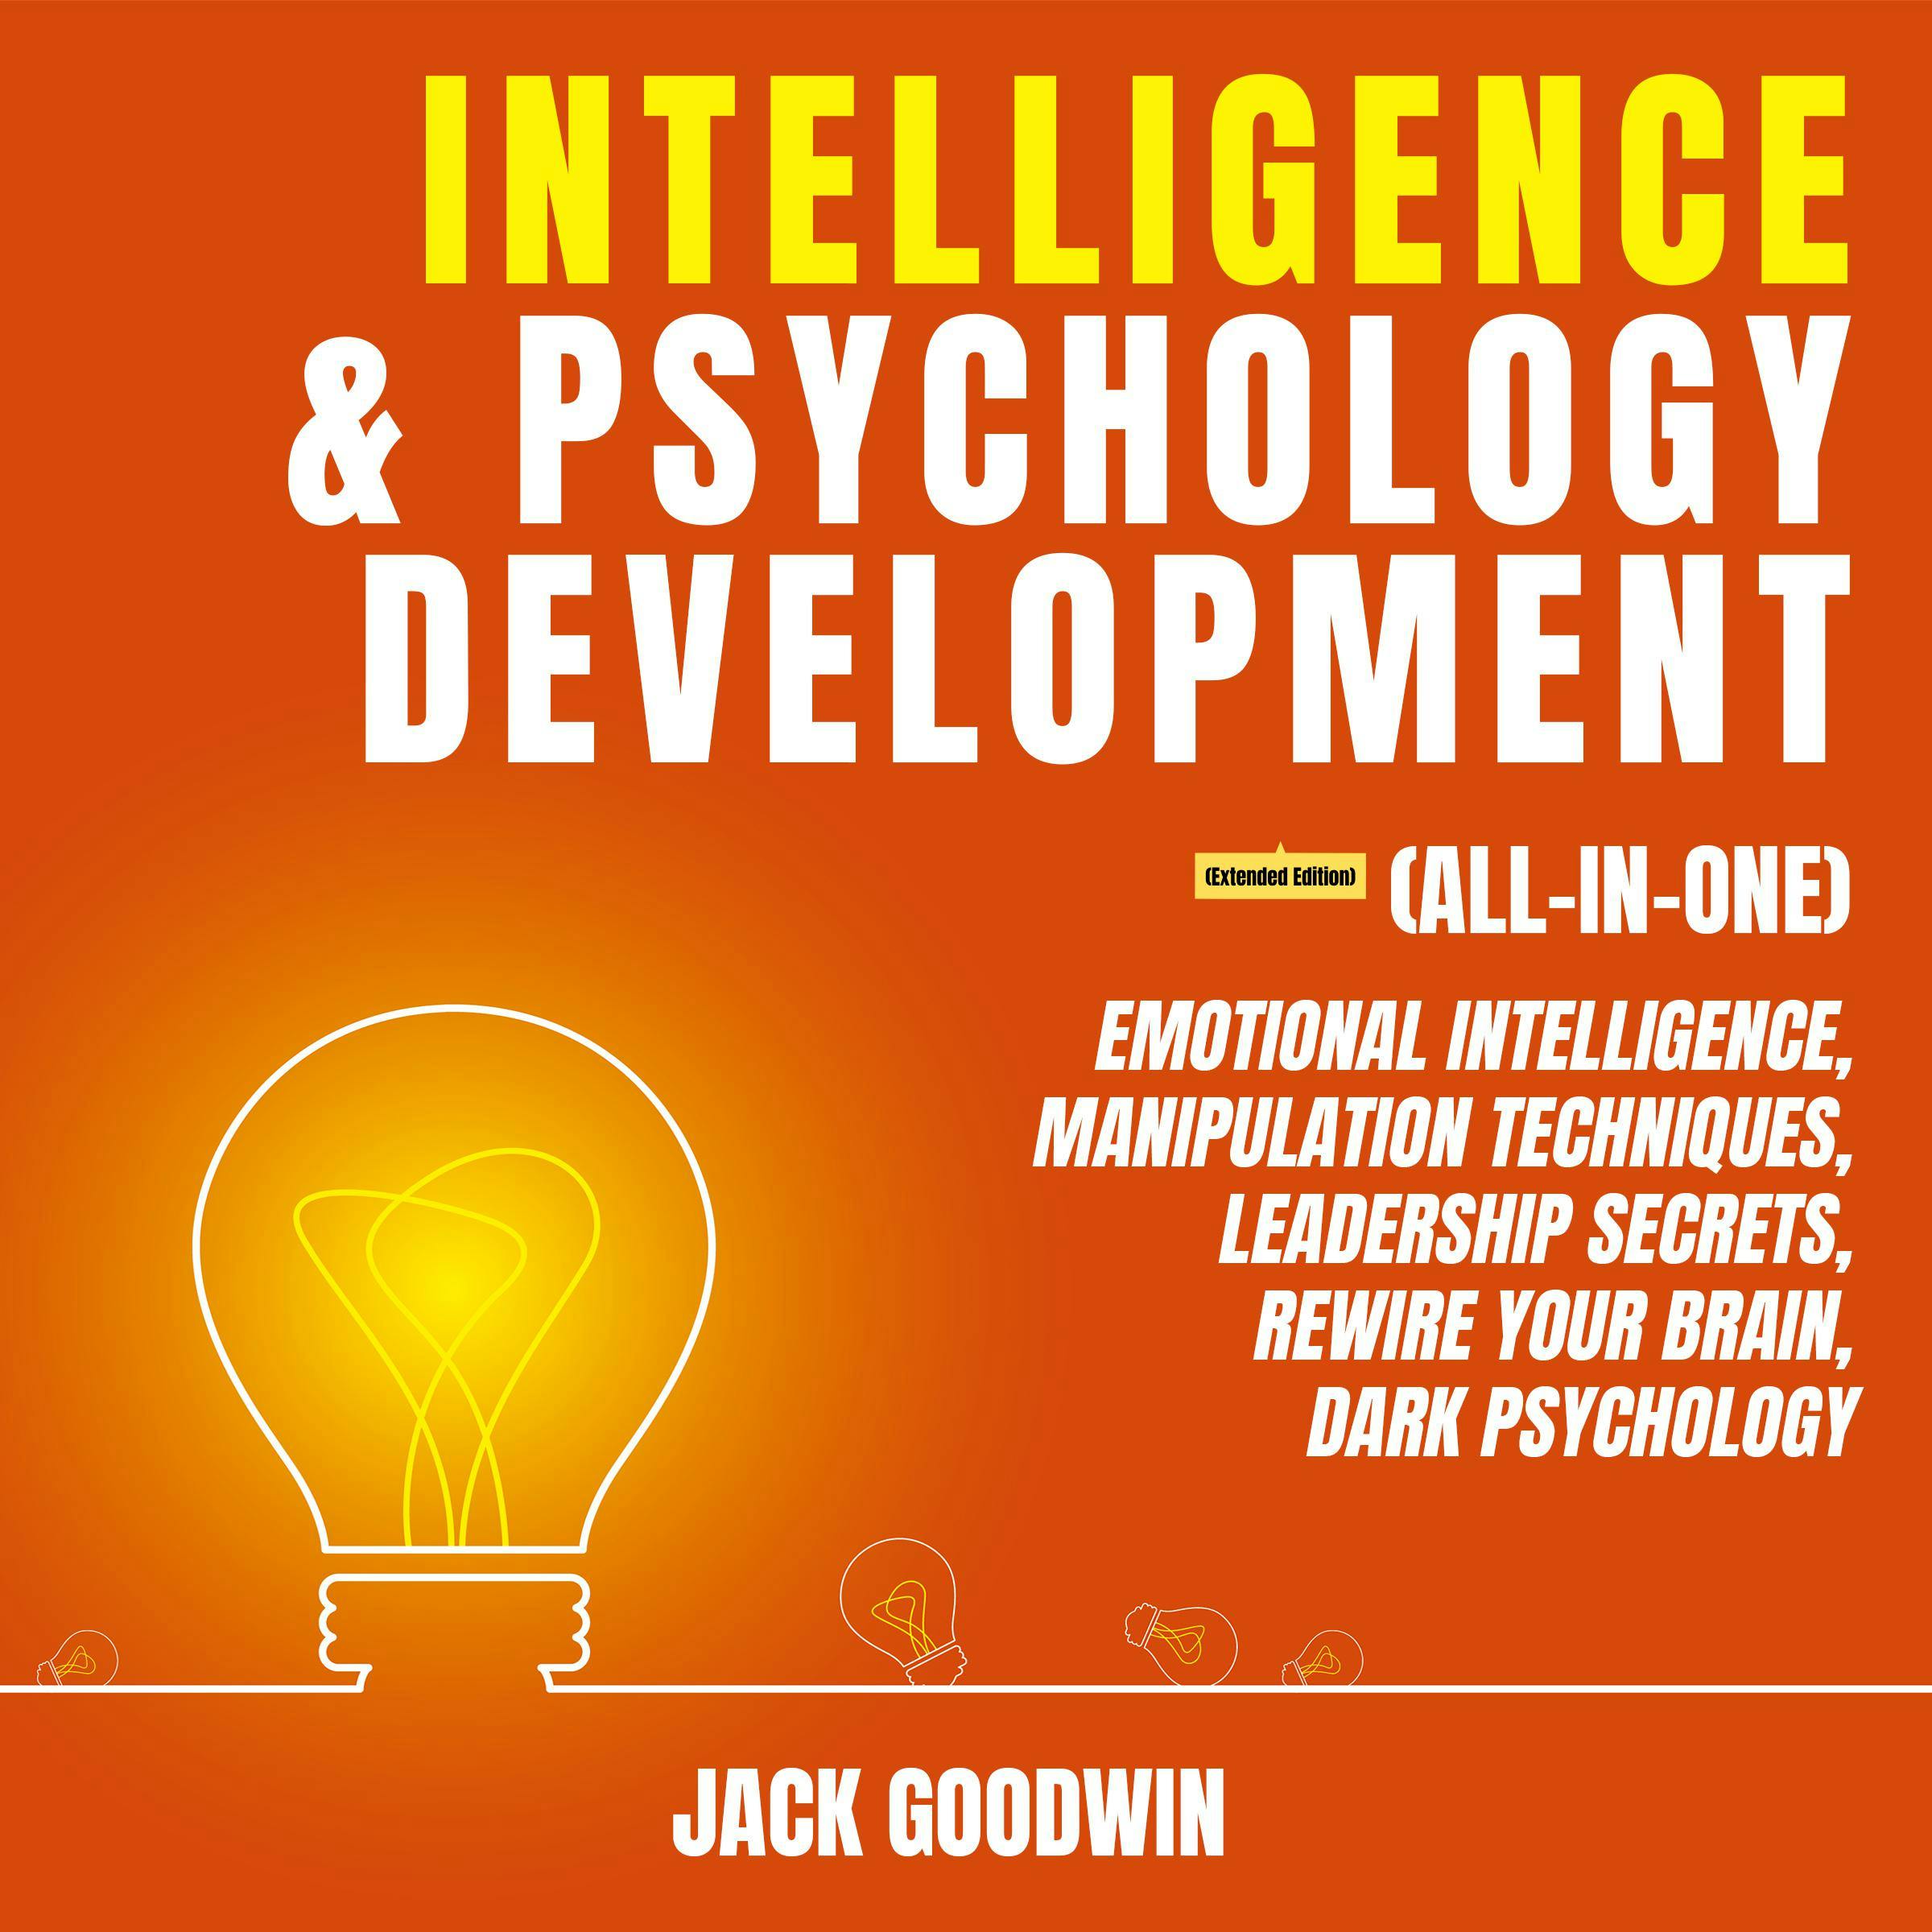 Intelligence & Psychology Development (All-in-One) (Extended Edition): Emotional Intelligence, Manipulation Techniques, Leadership Secrets, Rewire Your Brain, Dark Psychology - Jack Goodwin